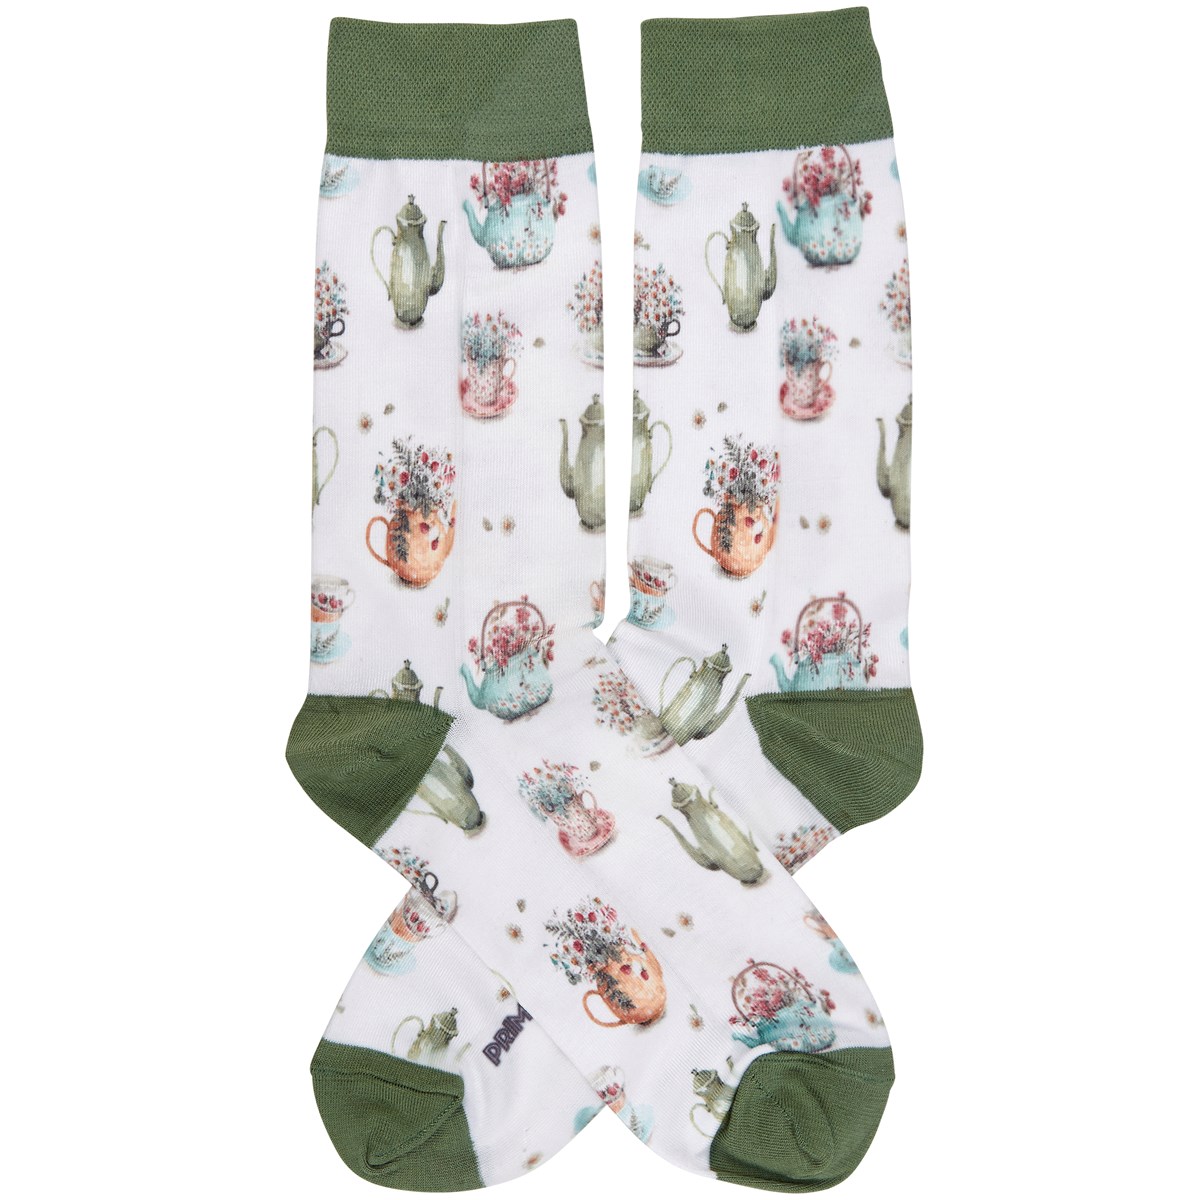 Tea Lover Socks - Polyester, Spandex